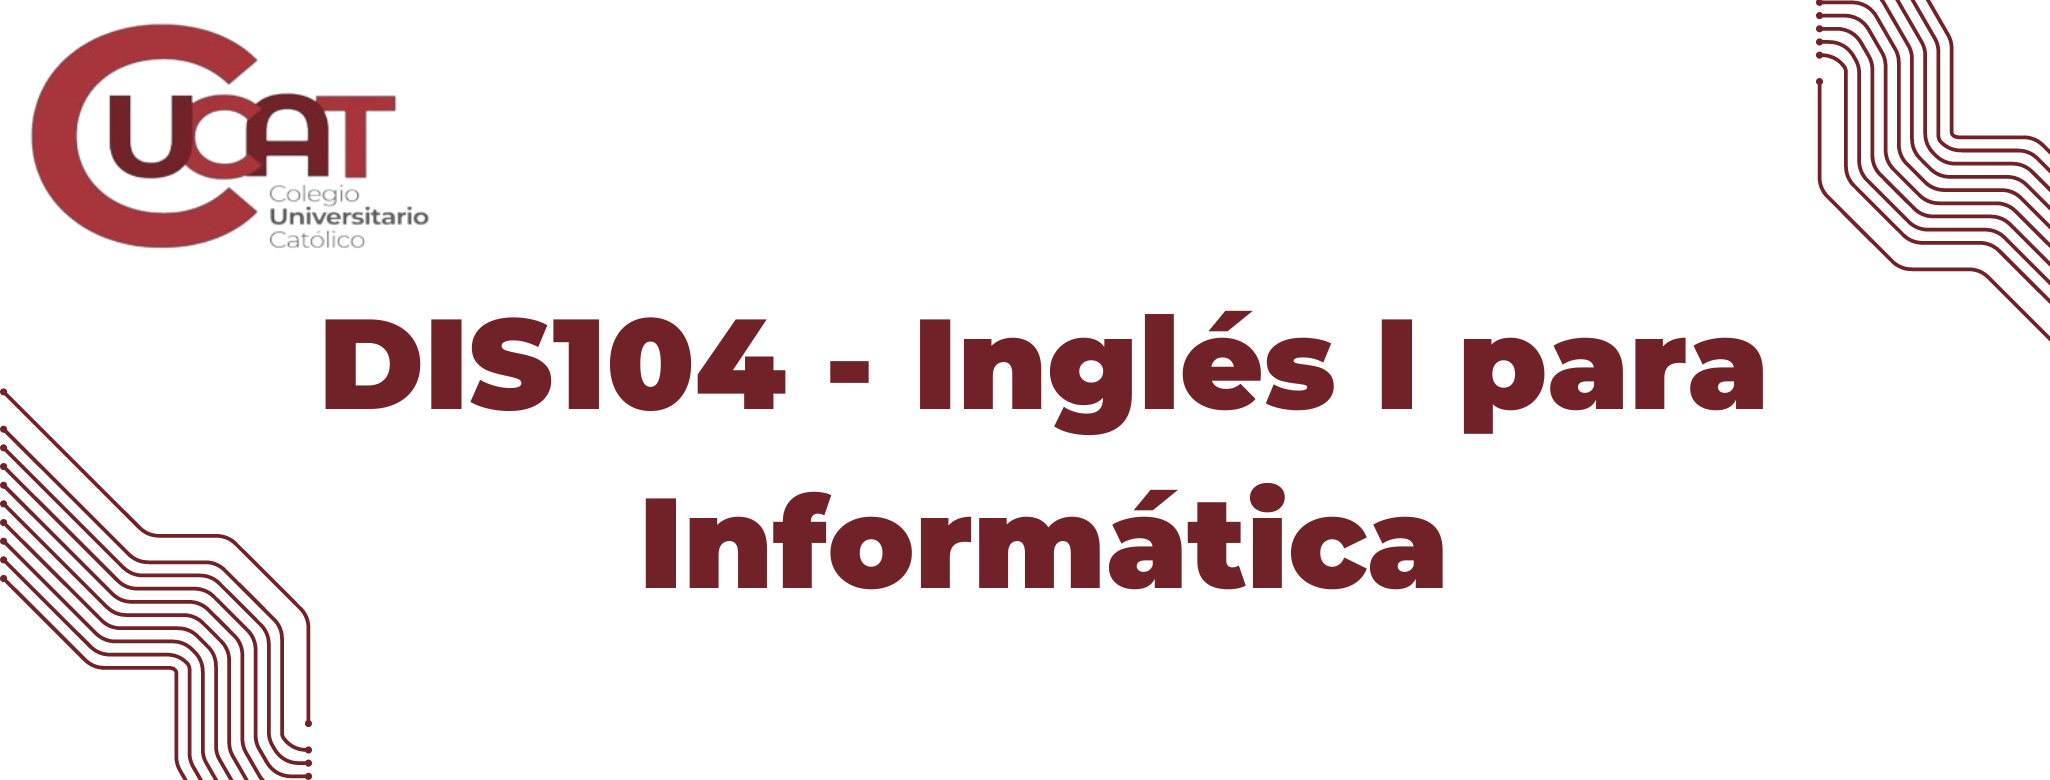 DIS104-Inglés I para Informática